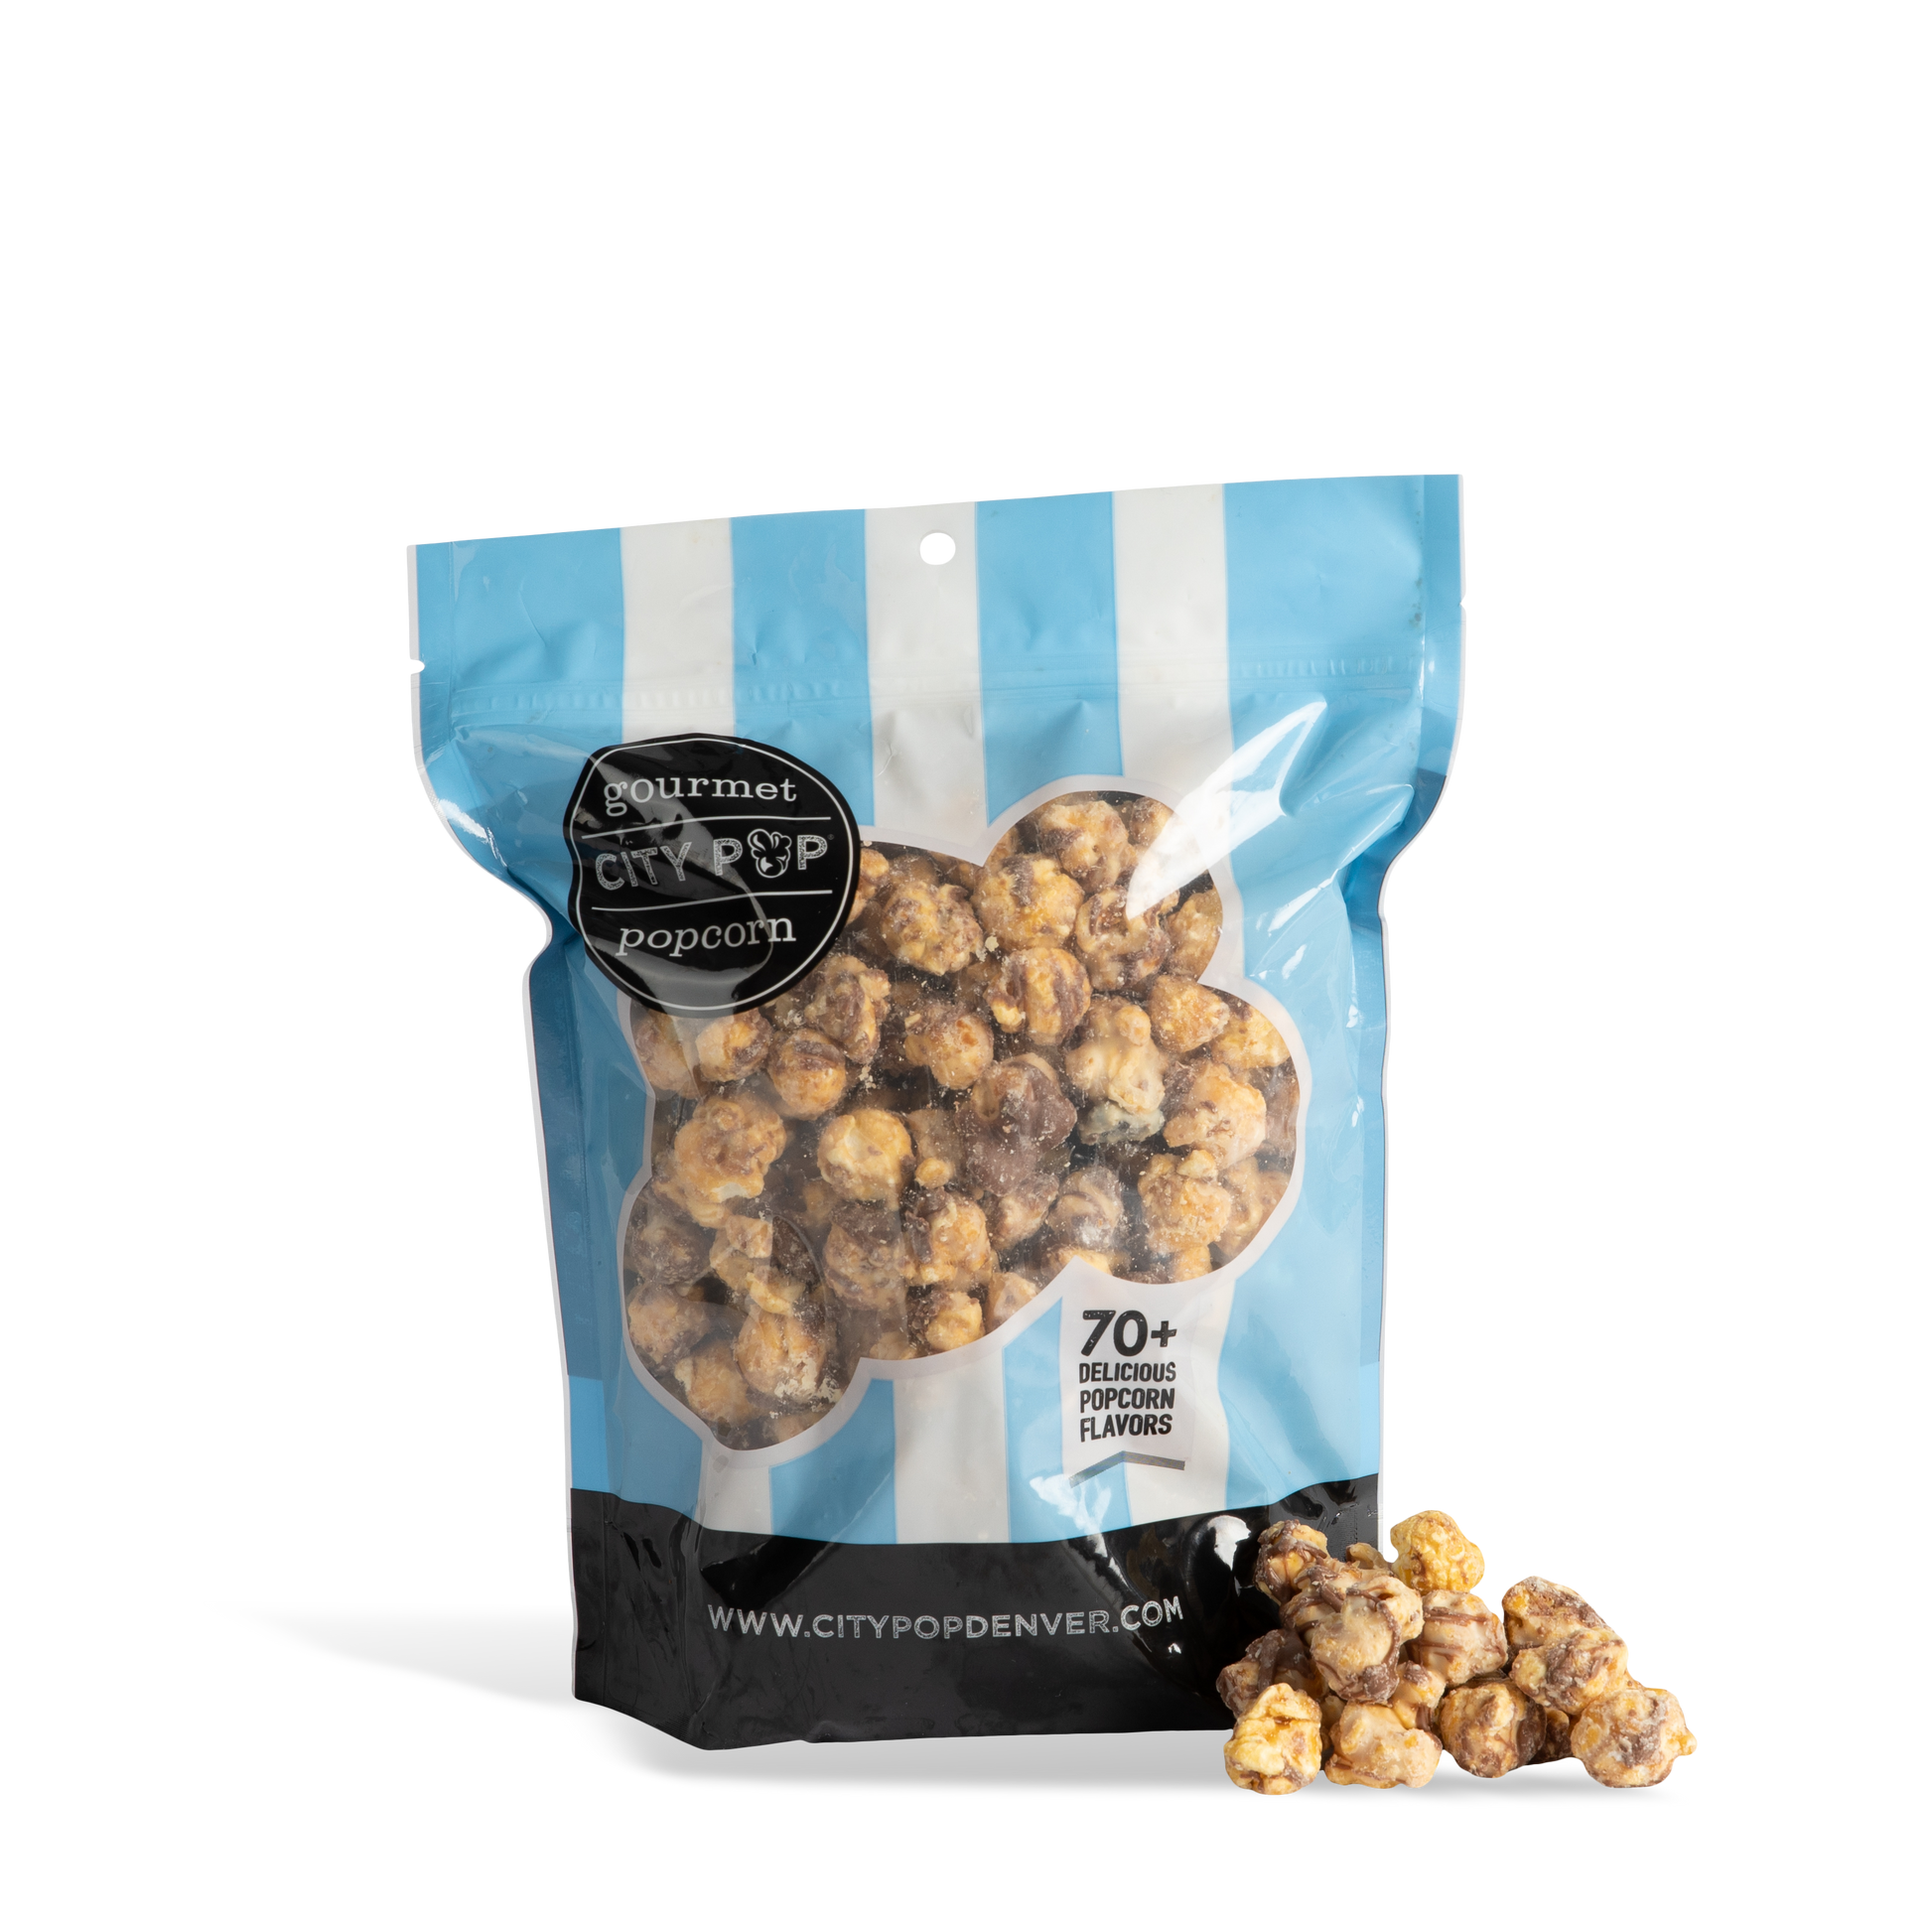 City Pop Peanut Butter Cup Popcorn Bag With Kernel